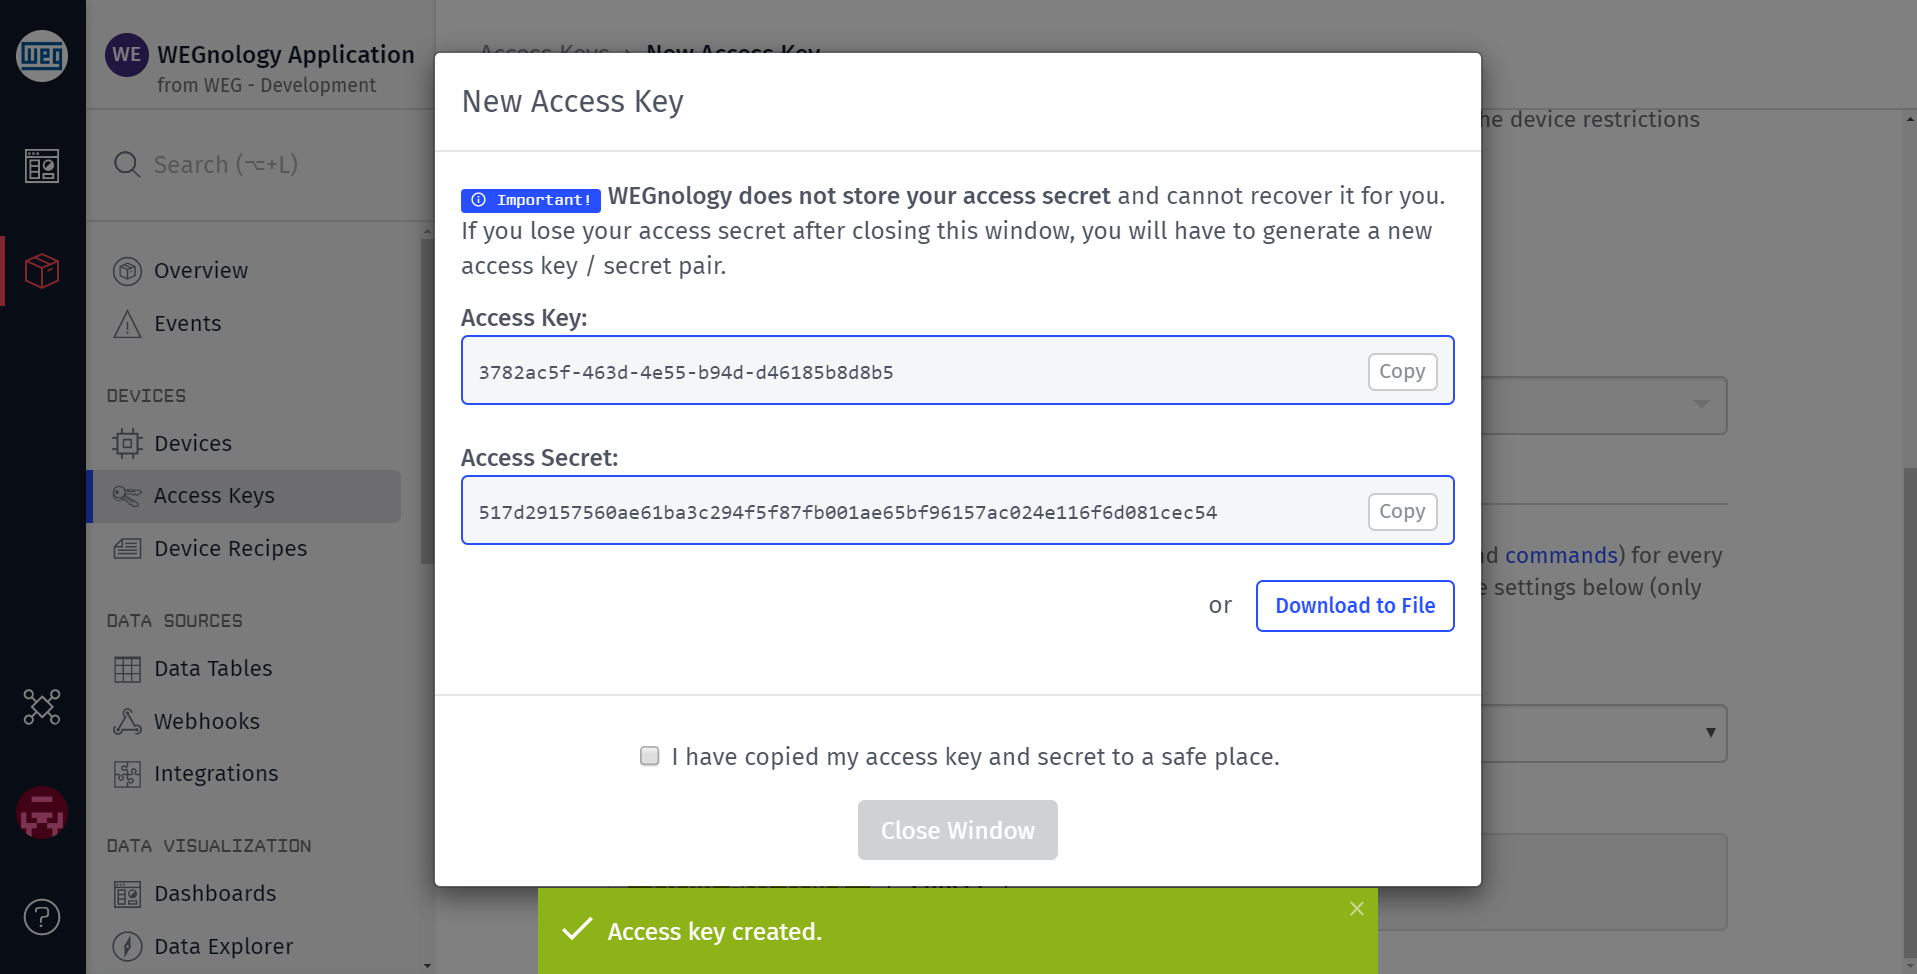 Access Key and Secret